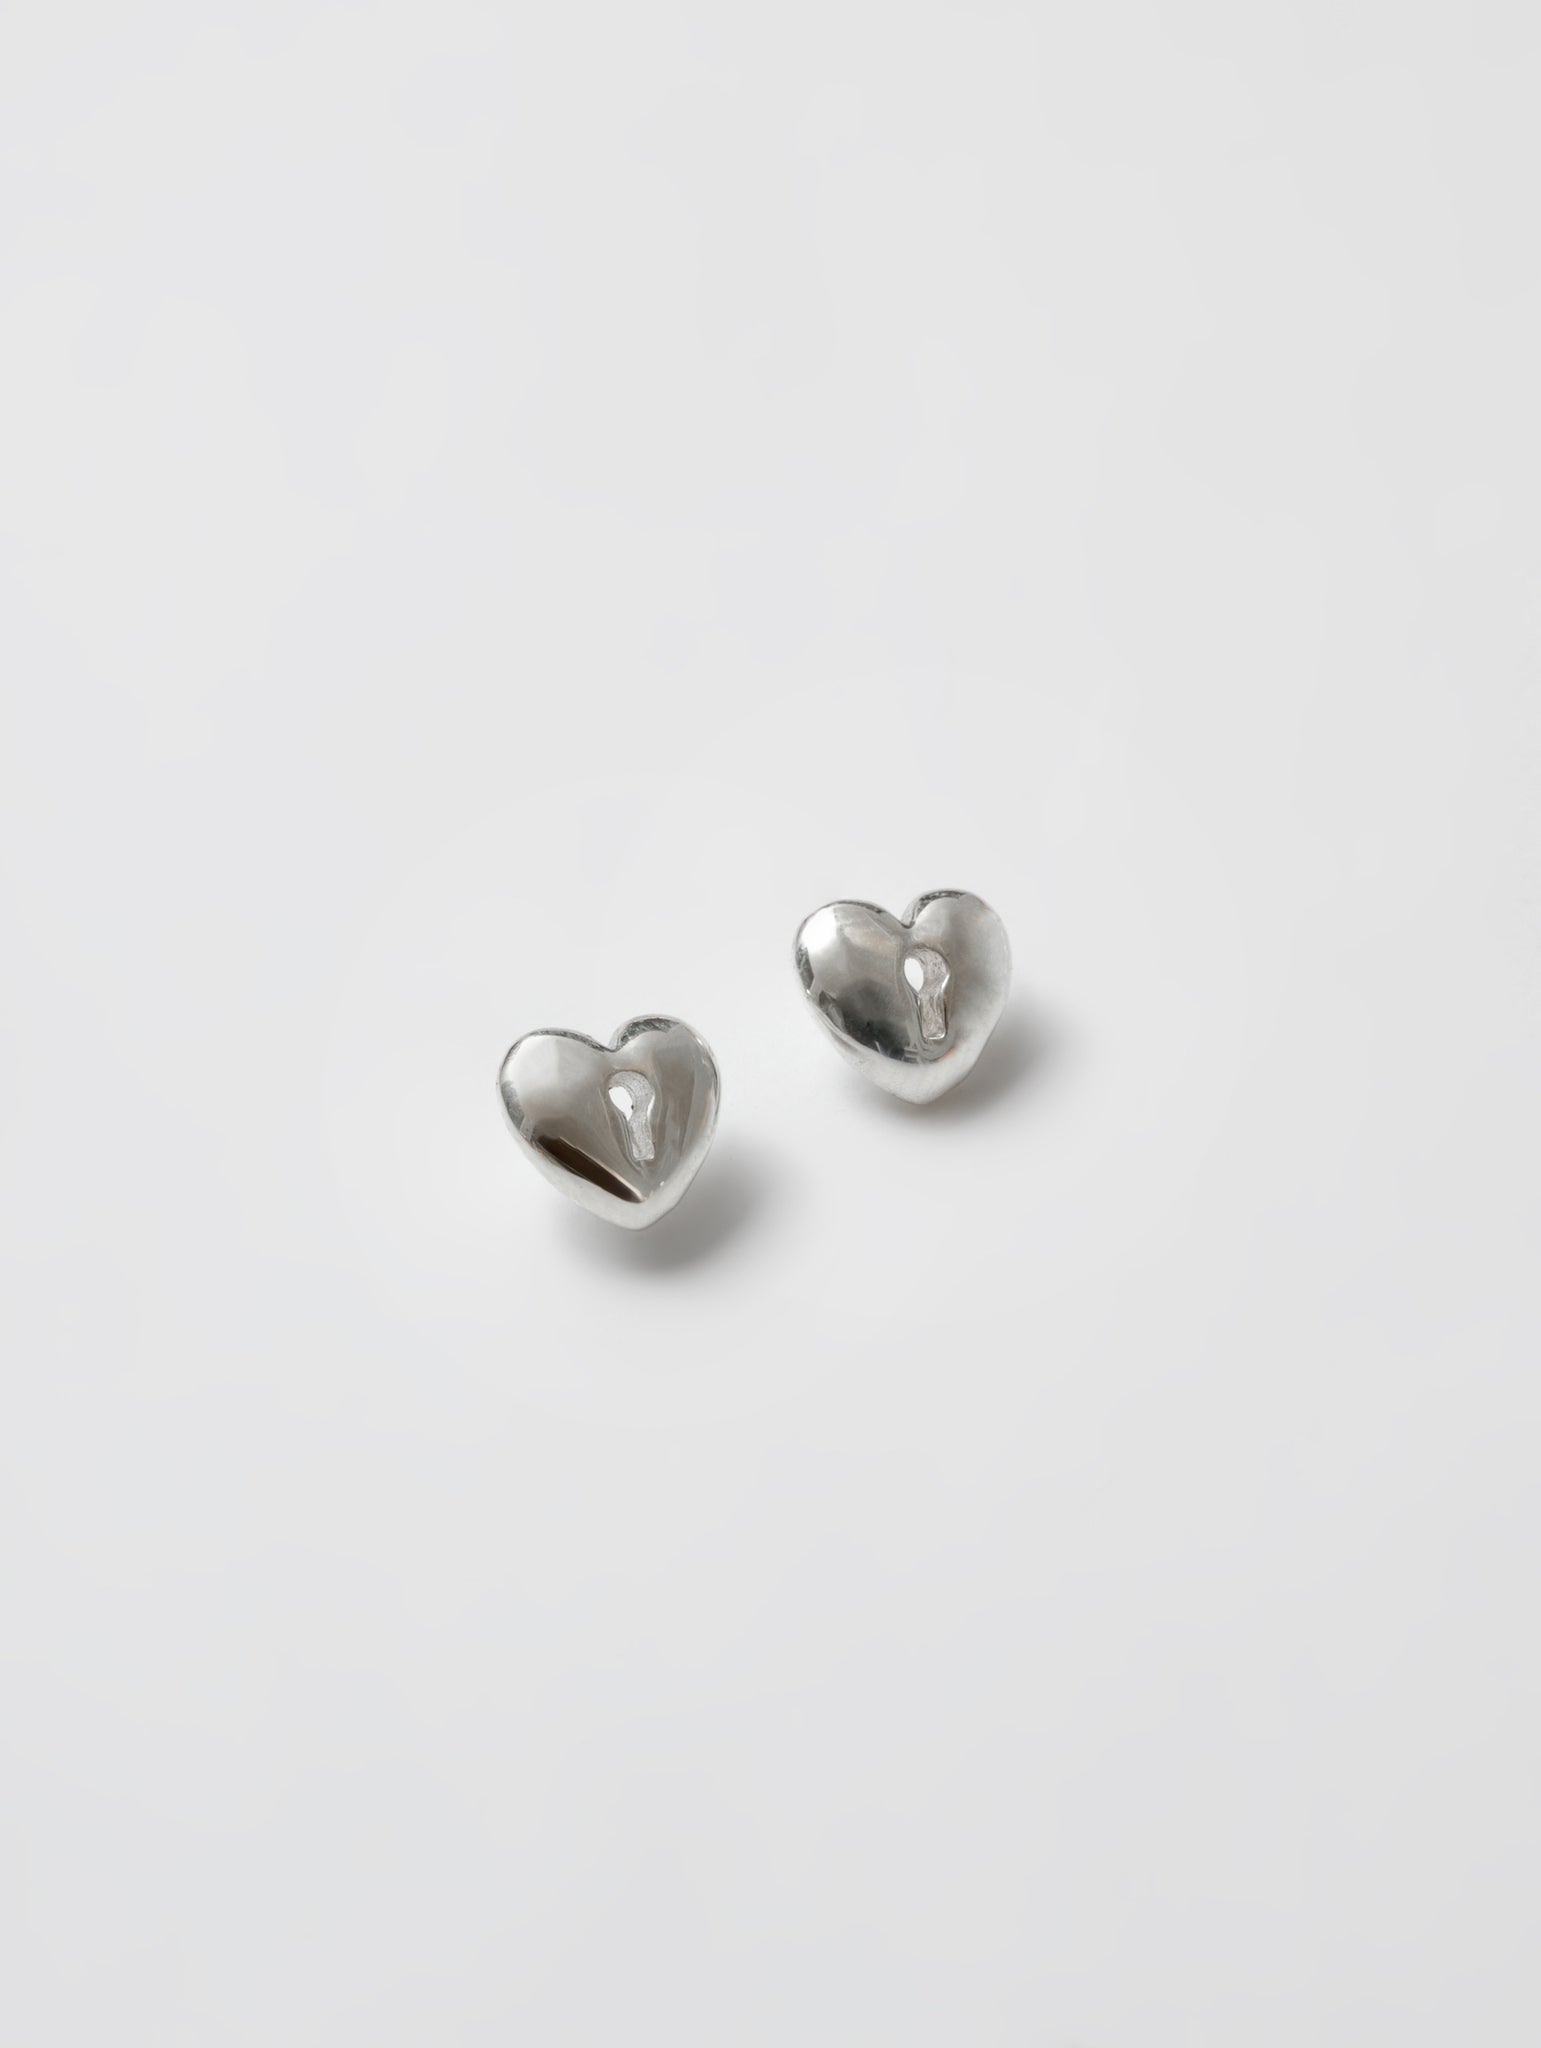 Heart Lock Charm Studs in Sterling Silver